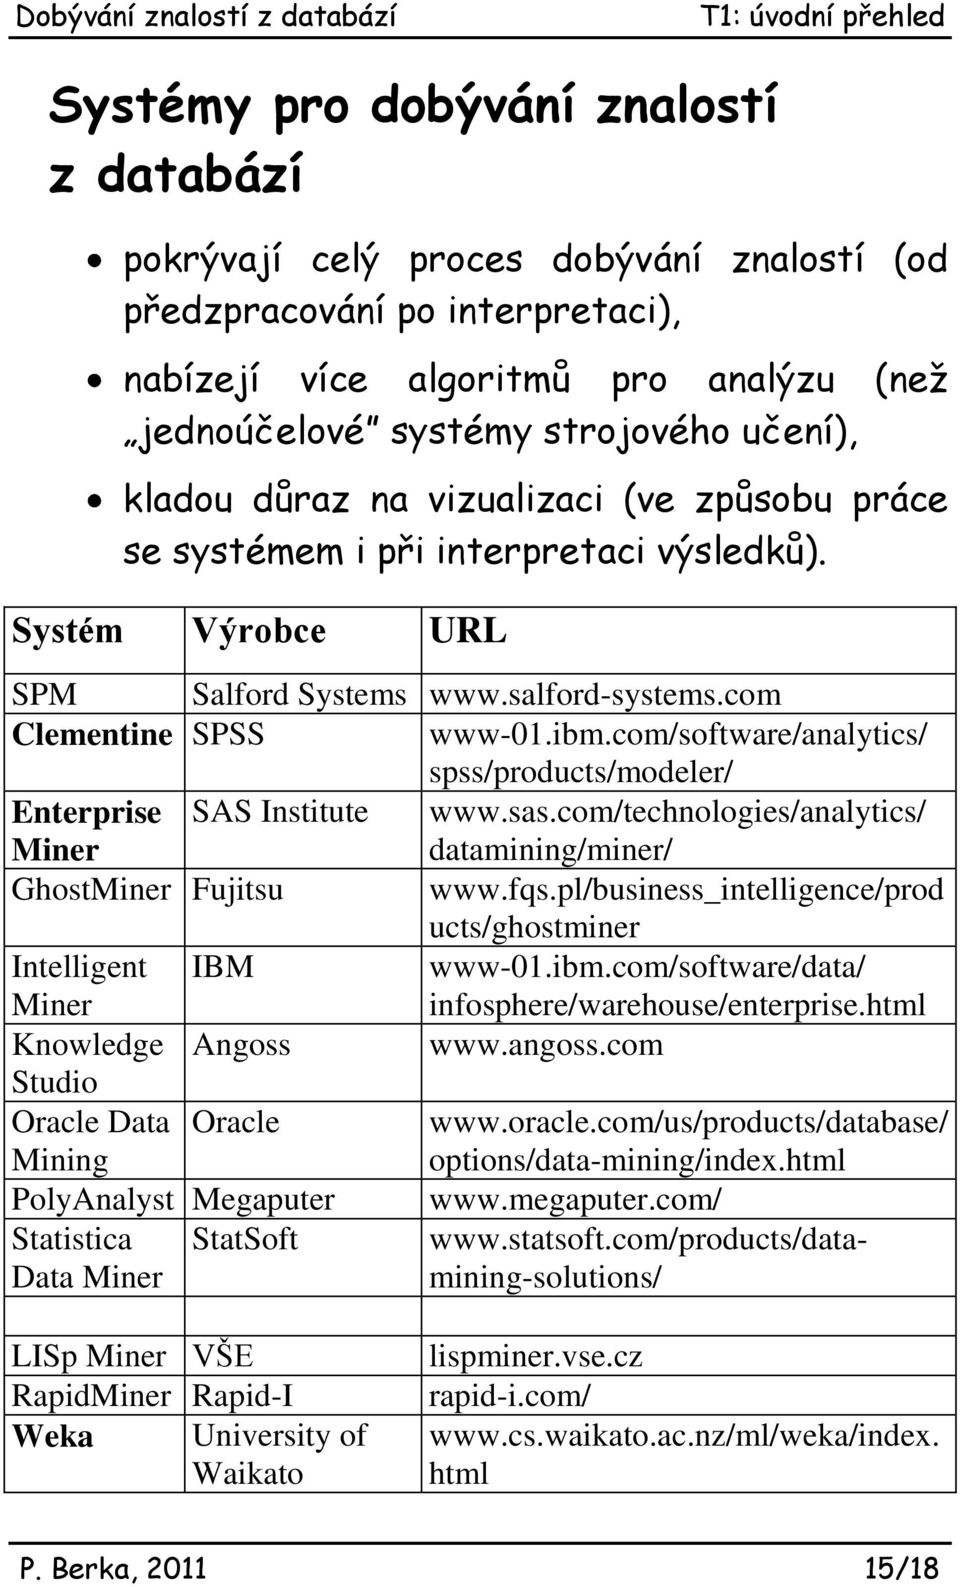 com/software/analytics/ spss/products/modeler/ Enterprise Miner SAS Institute www.sas.com/technologies/analytics/ datamining/miner/ GhostMiner Fujitsu www.fqs.